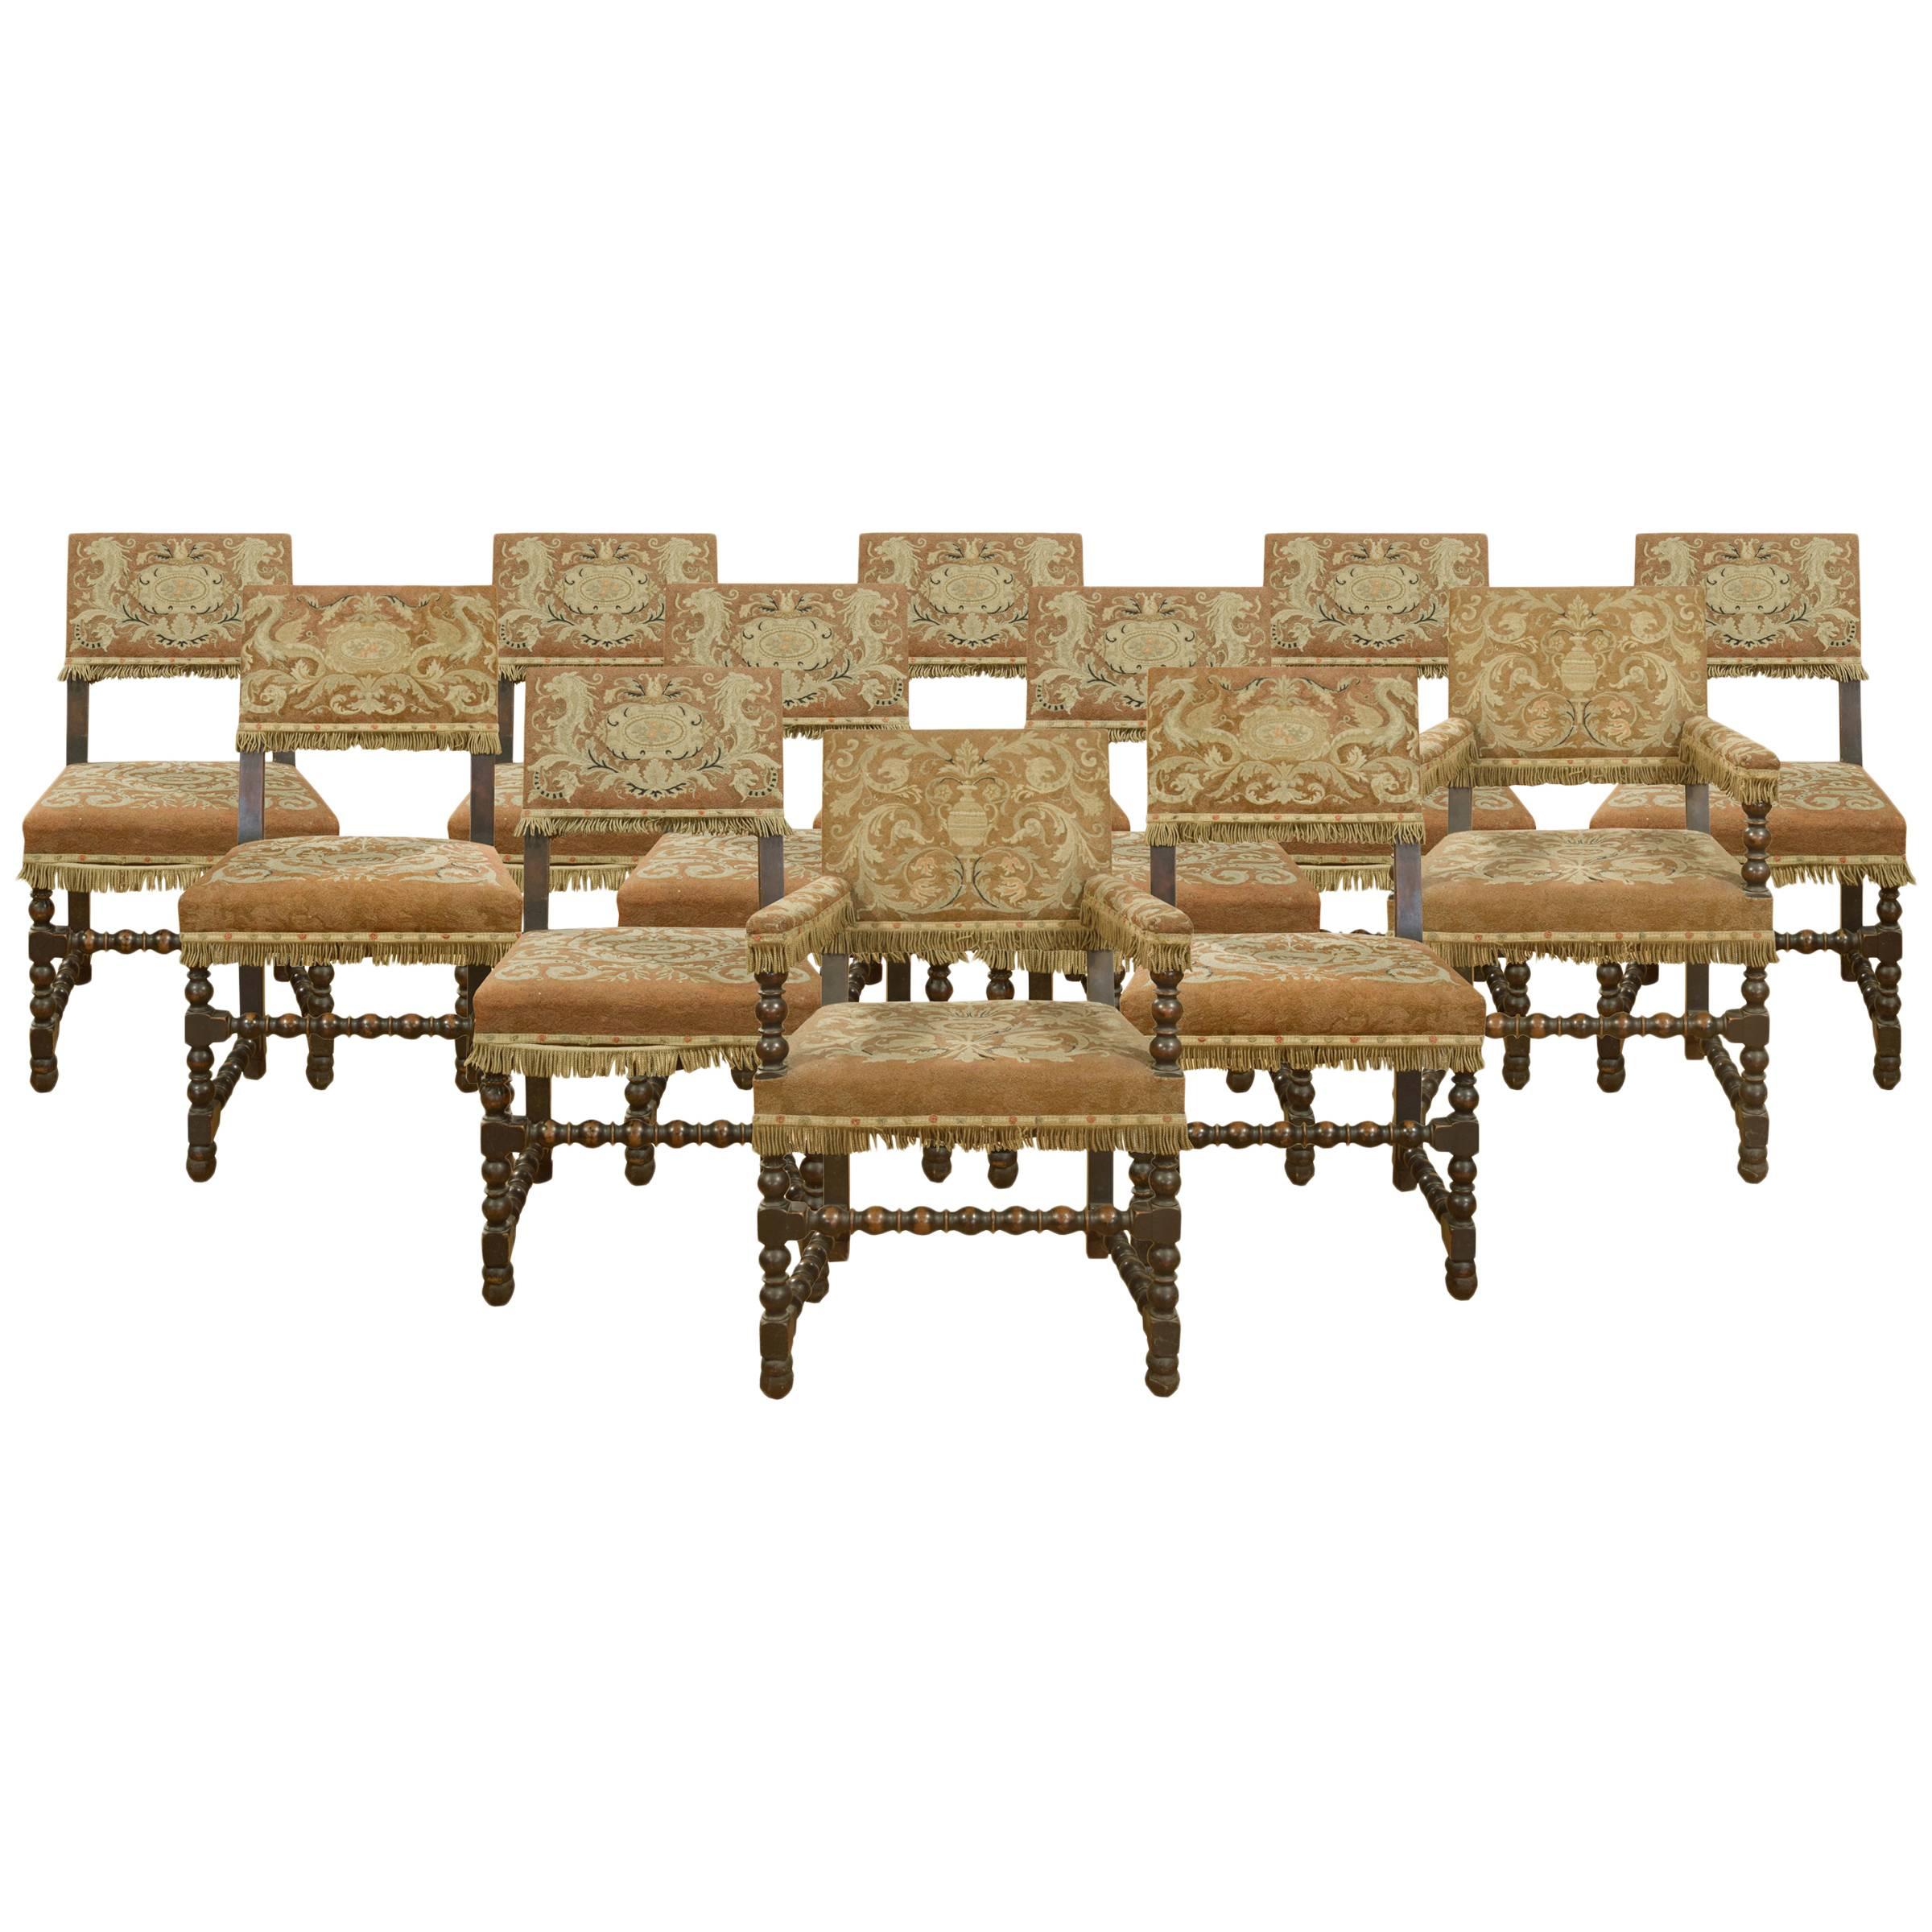 Set of Twelve Tudor Dining Chairs